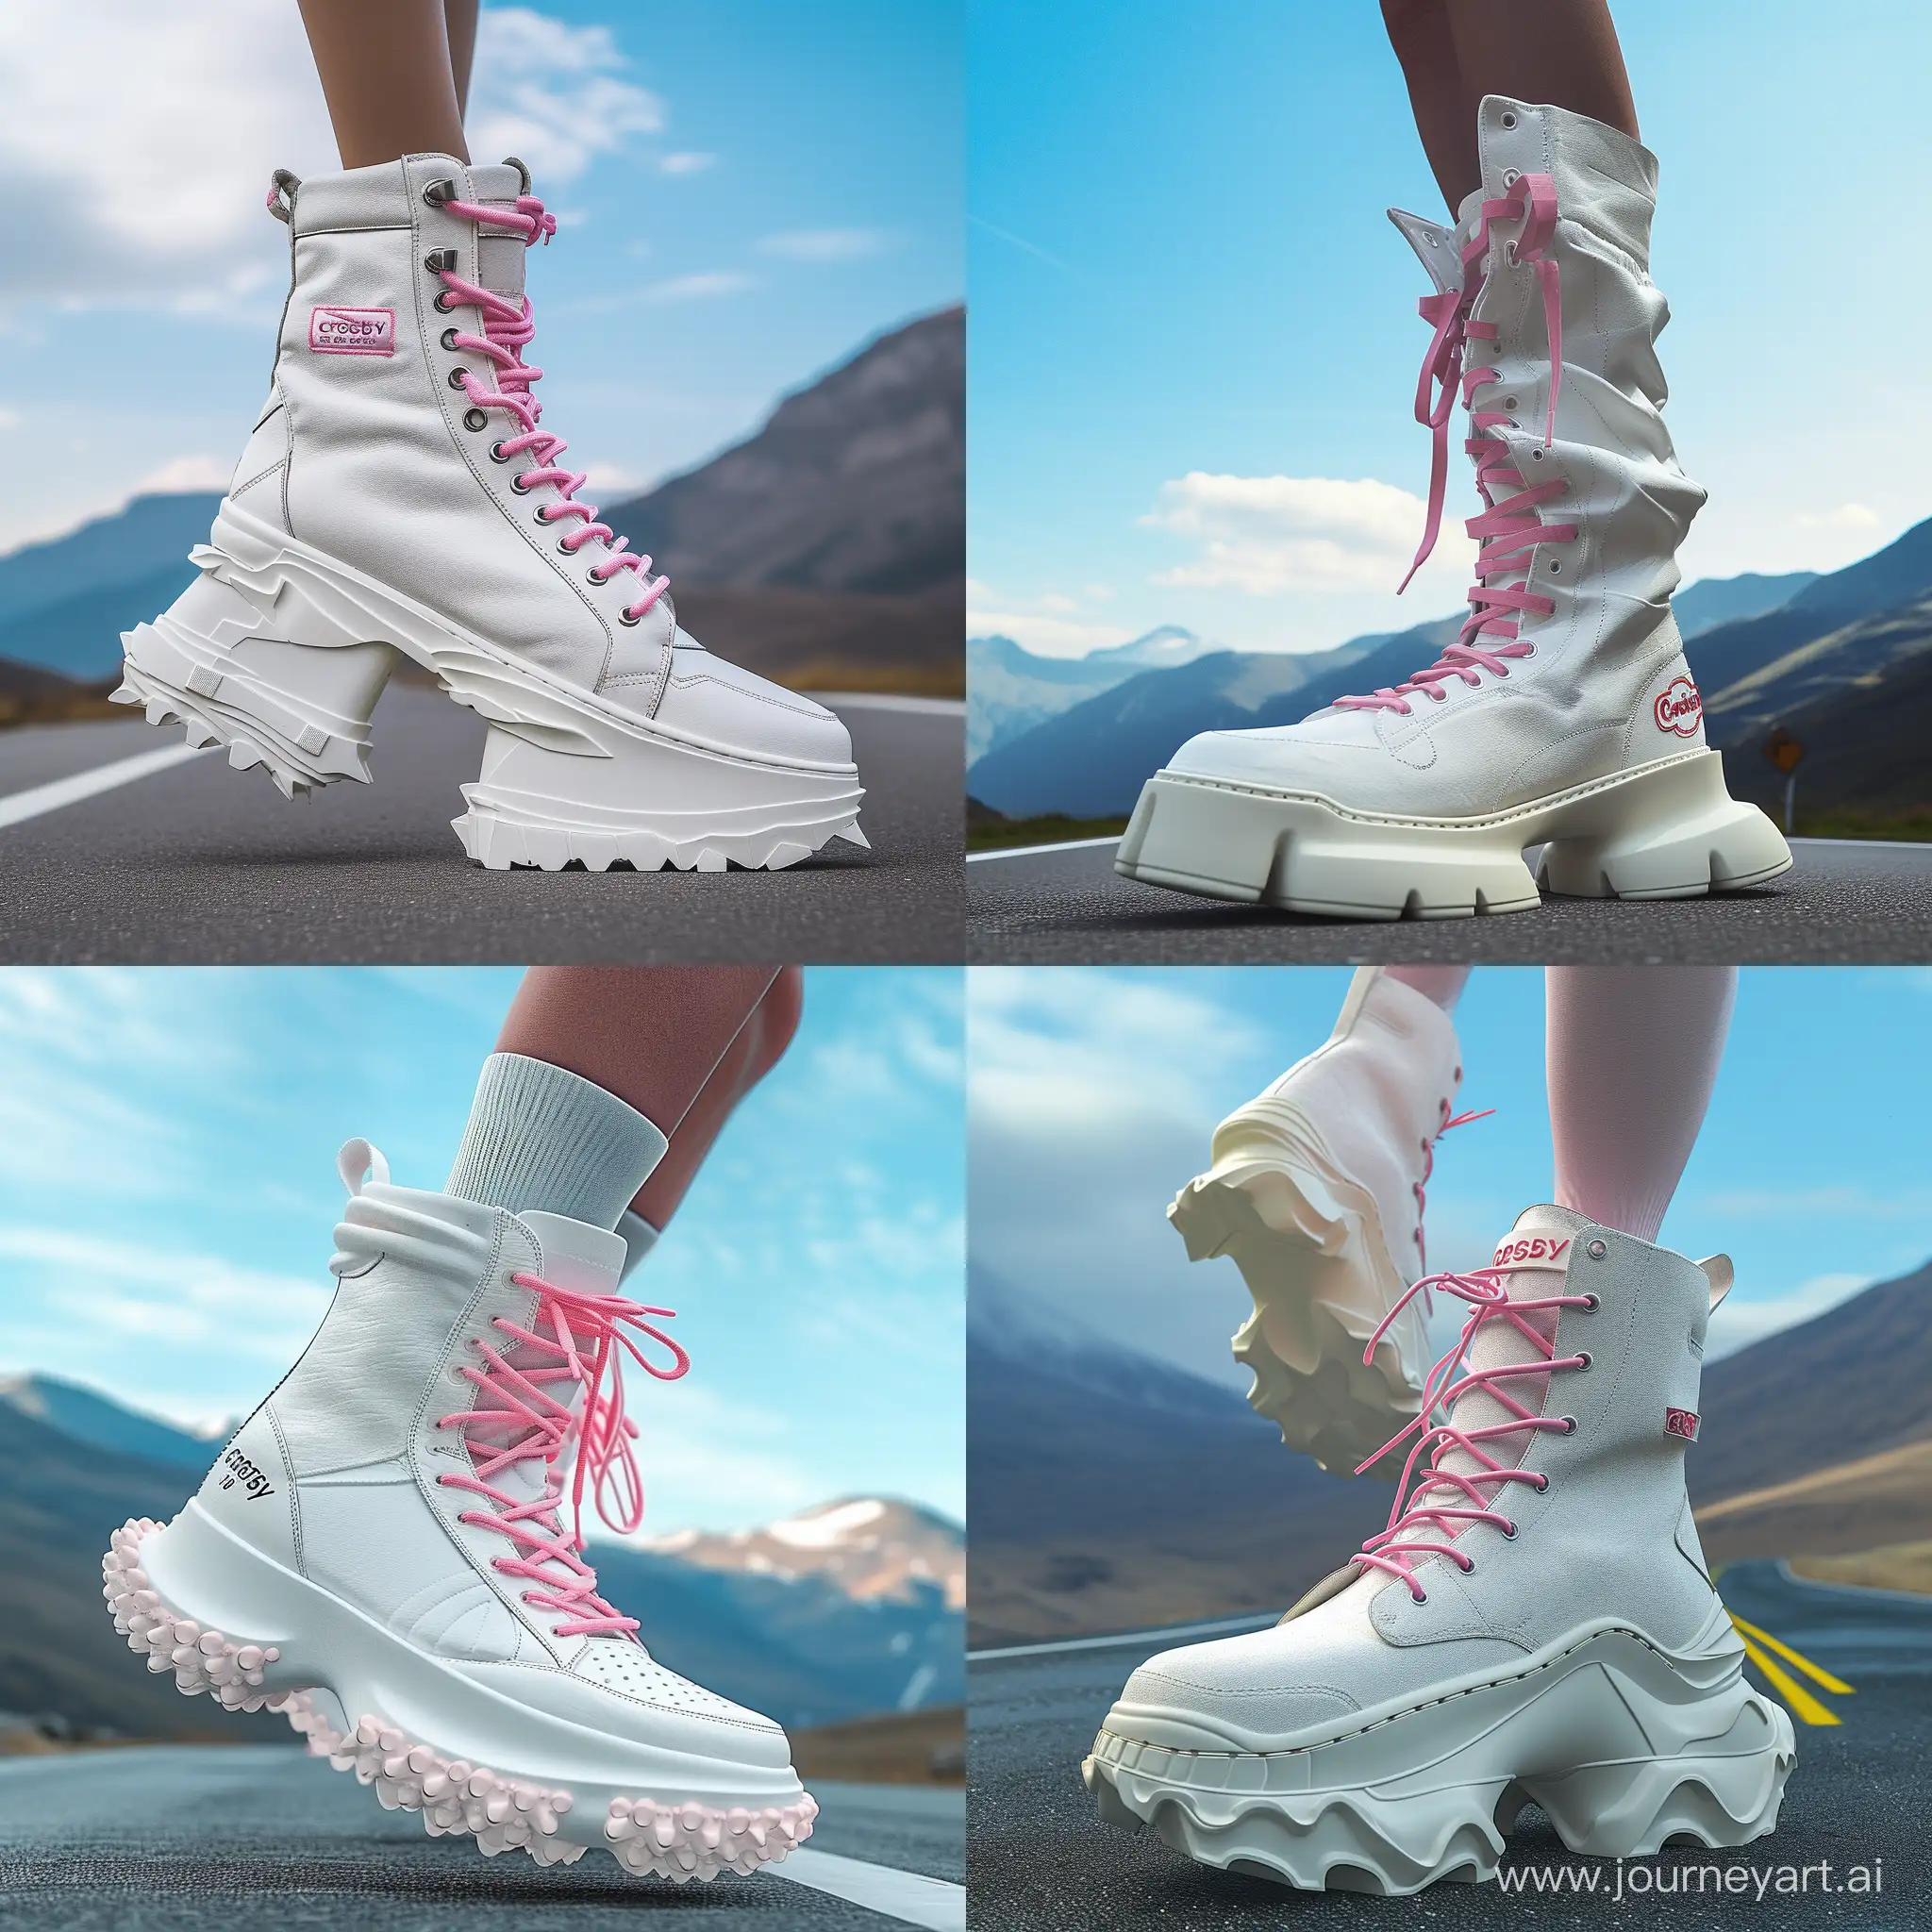 PinkLaced-Urban-Sneakers-in-Mountainous-Landscape